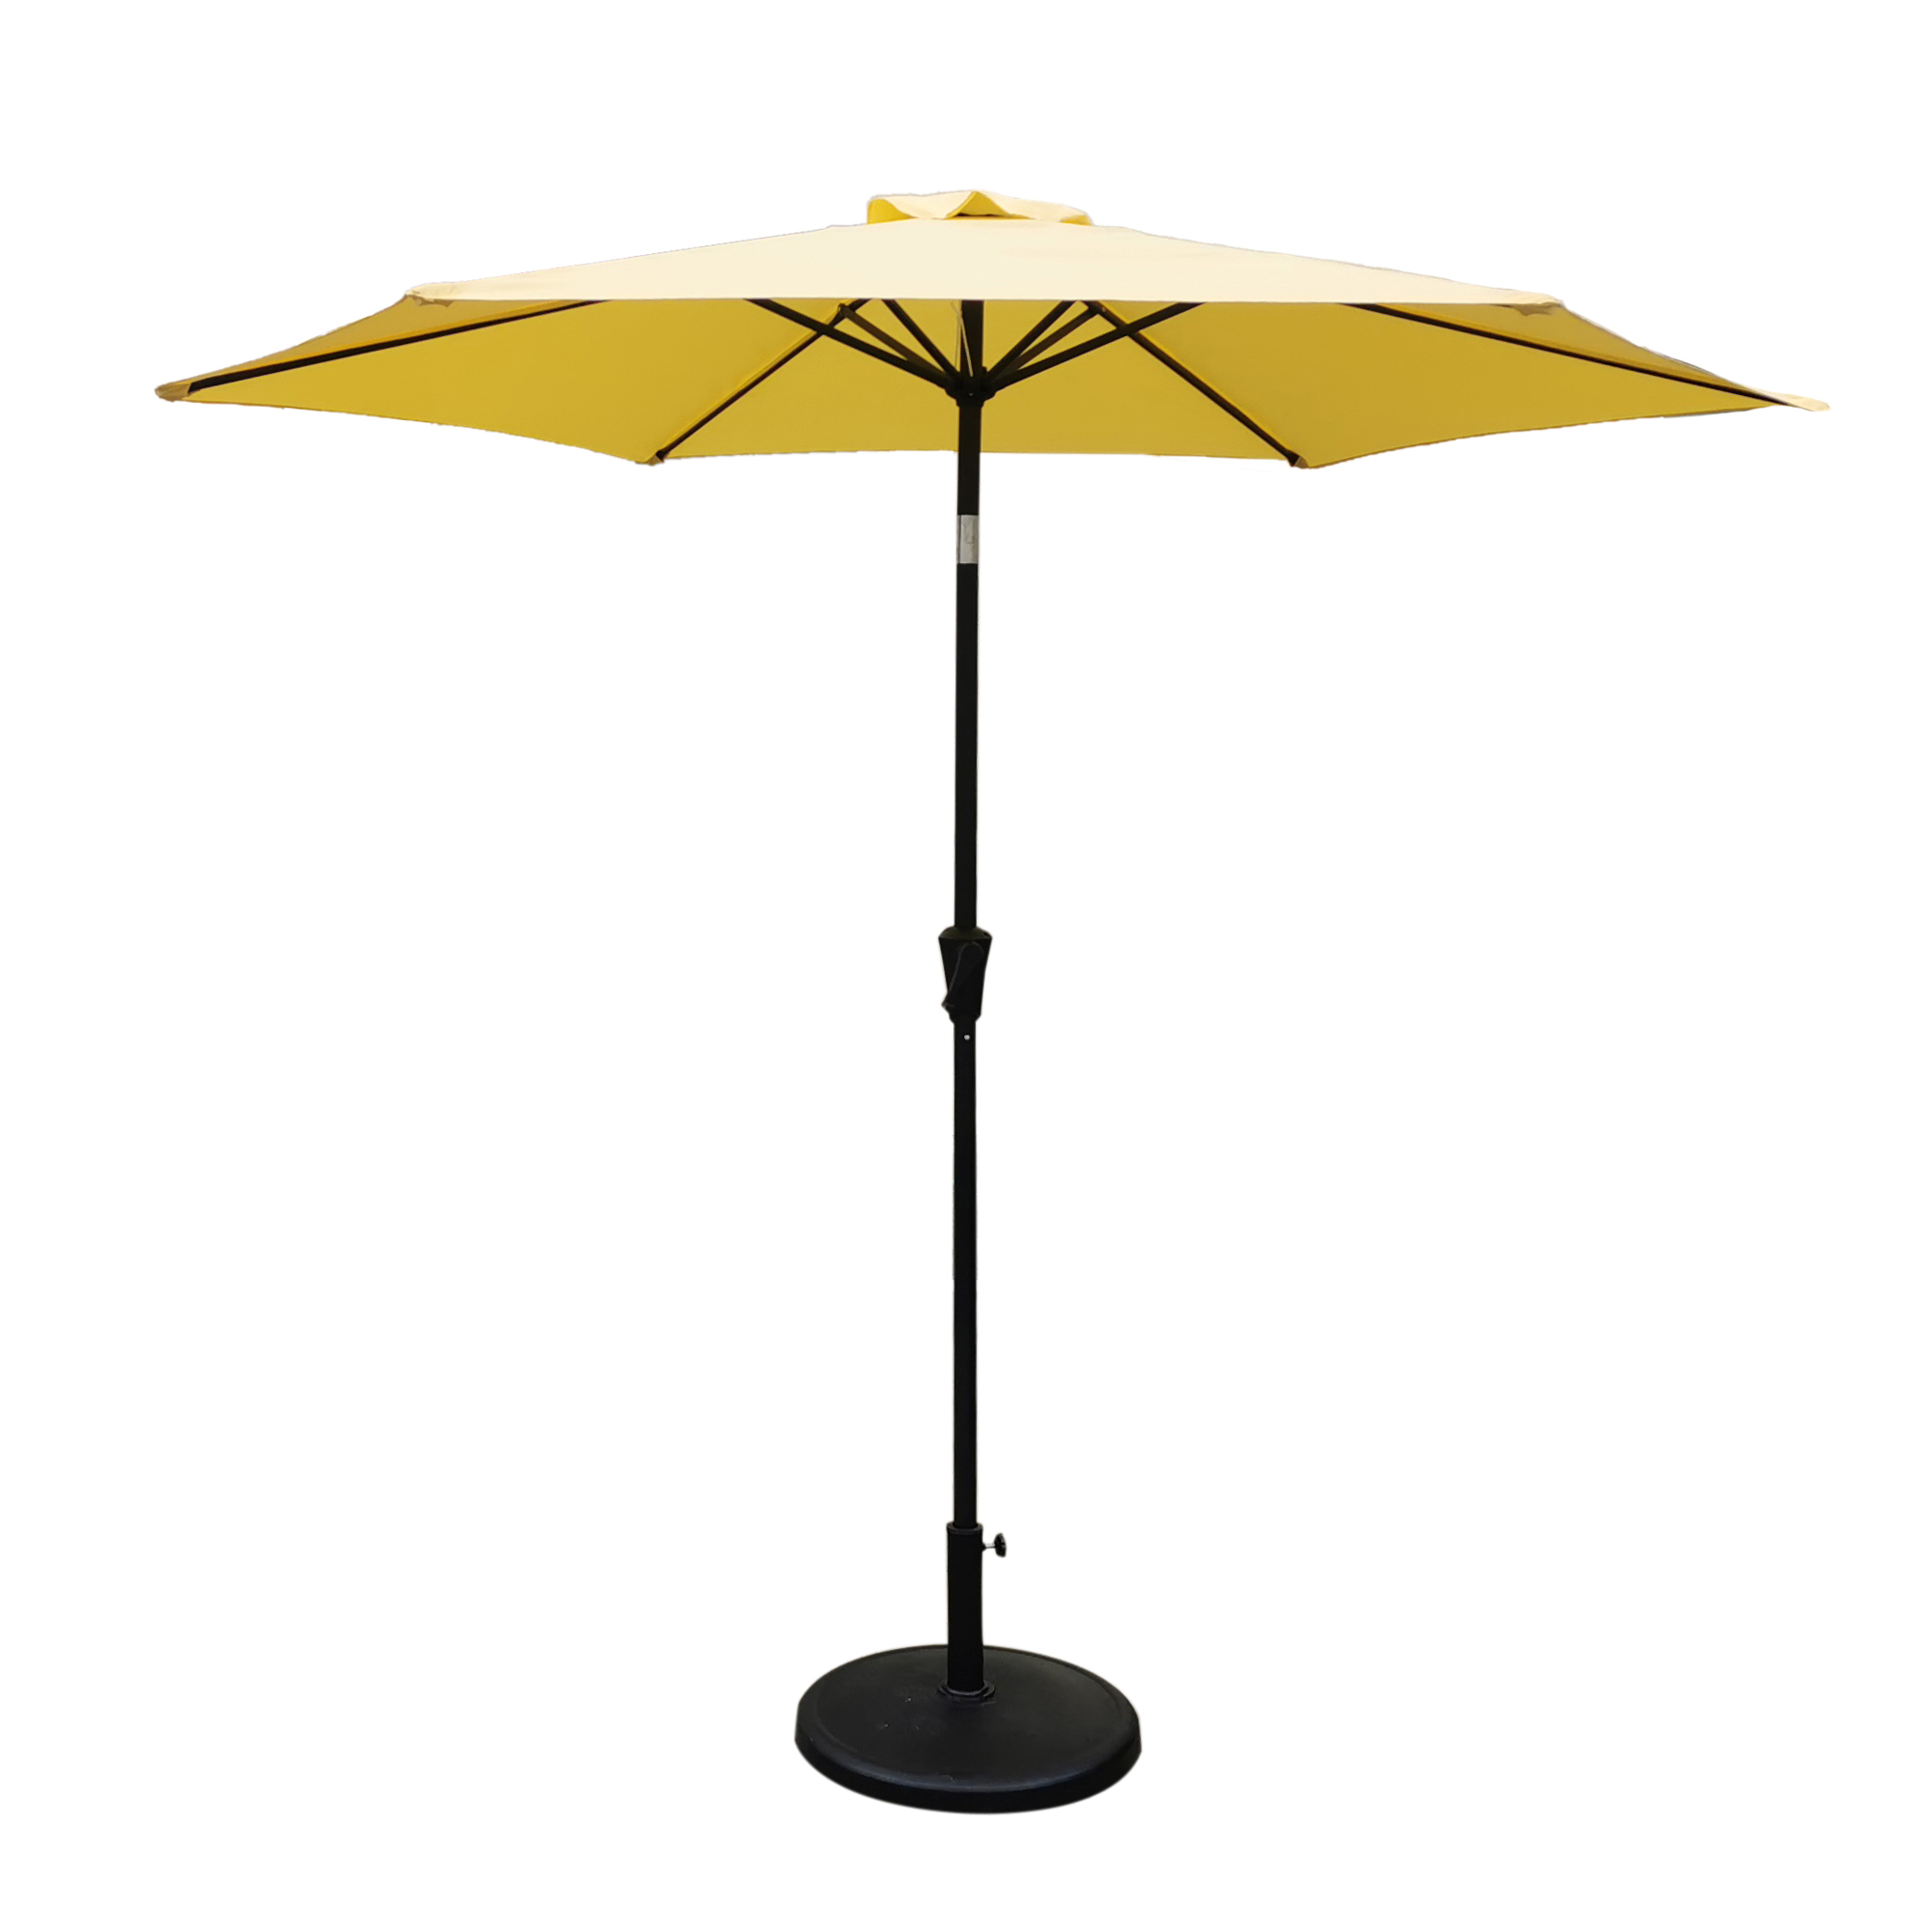 8.8 feet Outdoor Aluminum Patio Umbrella, Patio Umbrella, Market Umbrella with 42 pounds Round Resin Umbrella Base, Push Button Tilt and Crank lift, Yellow